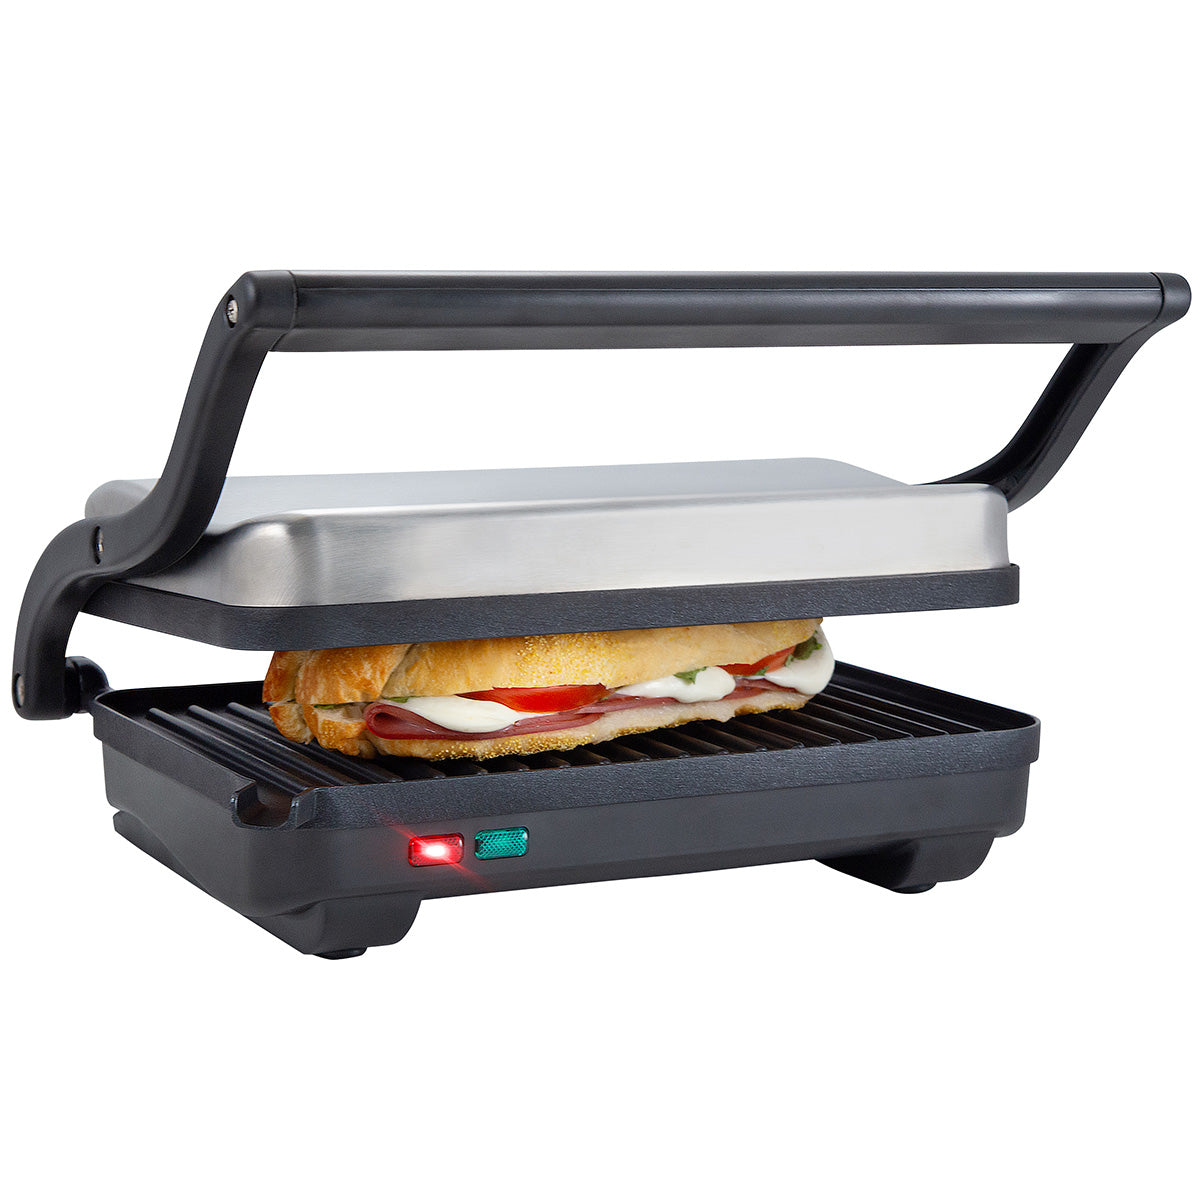 Premium Deluxe 2 Slice Panini Press Grill Sandwich Maker Opens fully flat 180 degrees